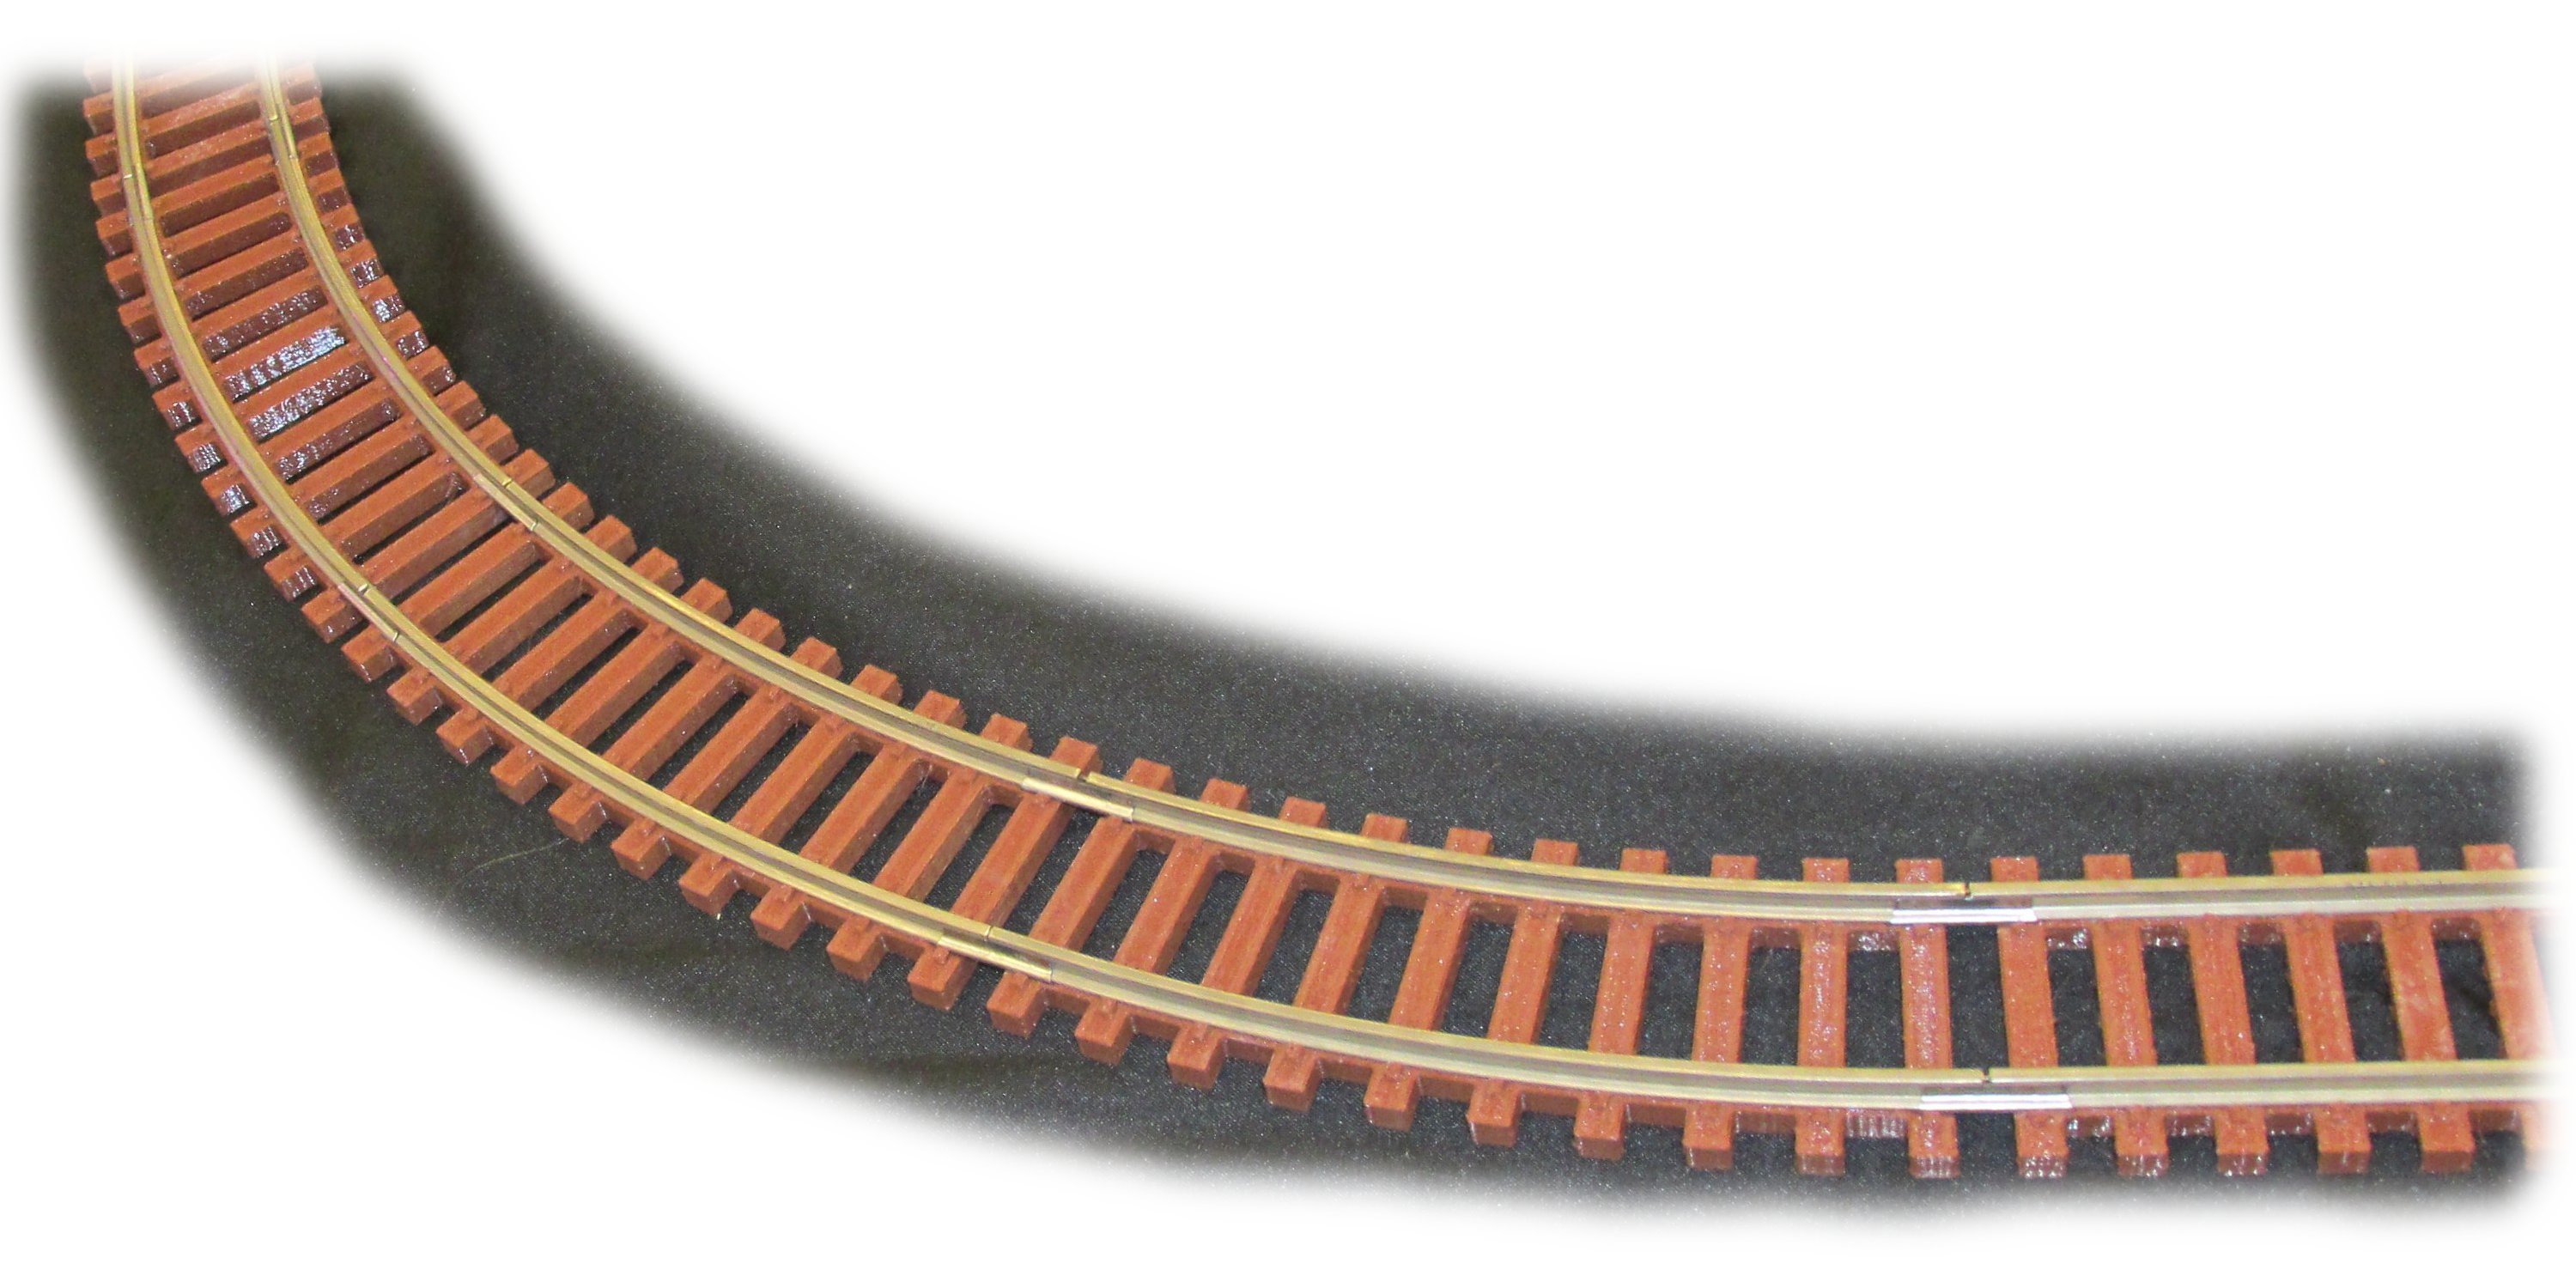 2x Lego ® Railway Track Rail 9V Curved Curve Train Track Curved 2867